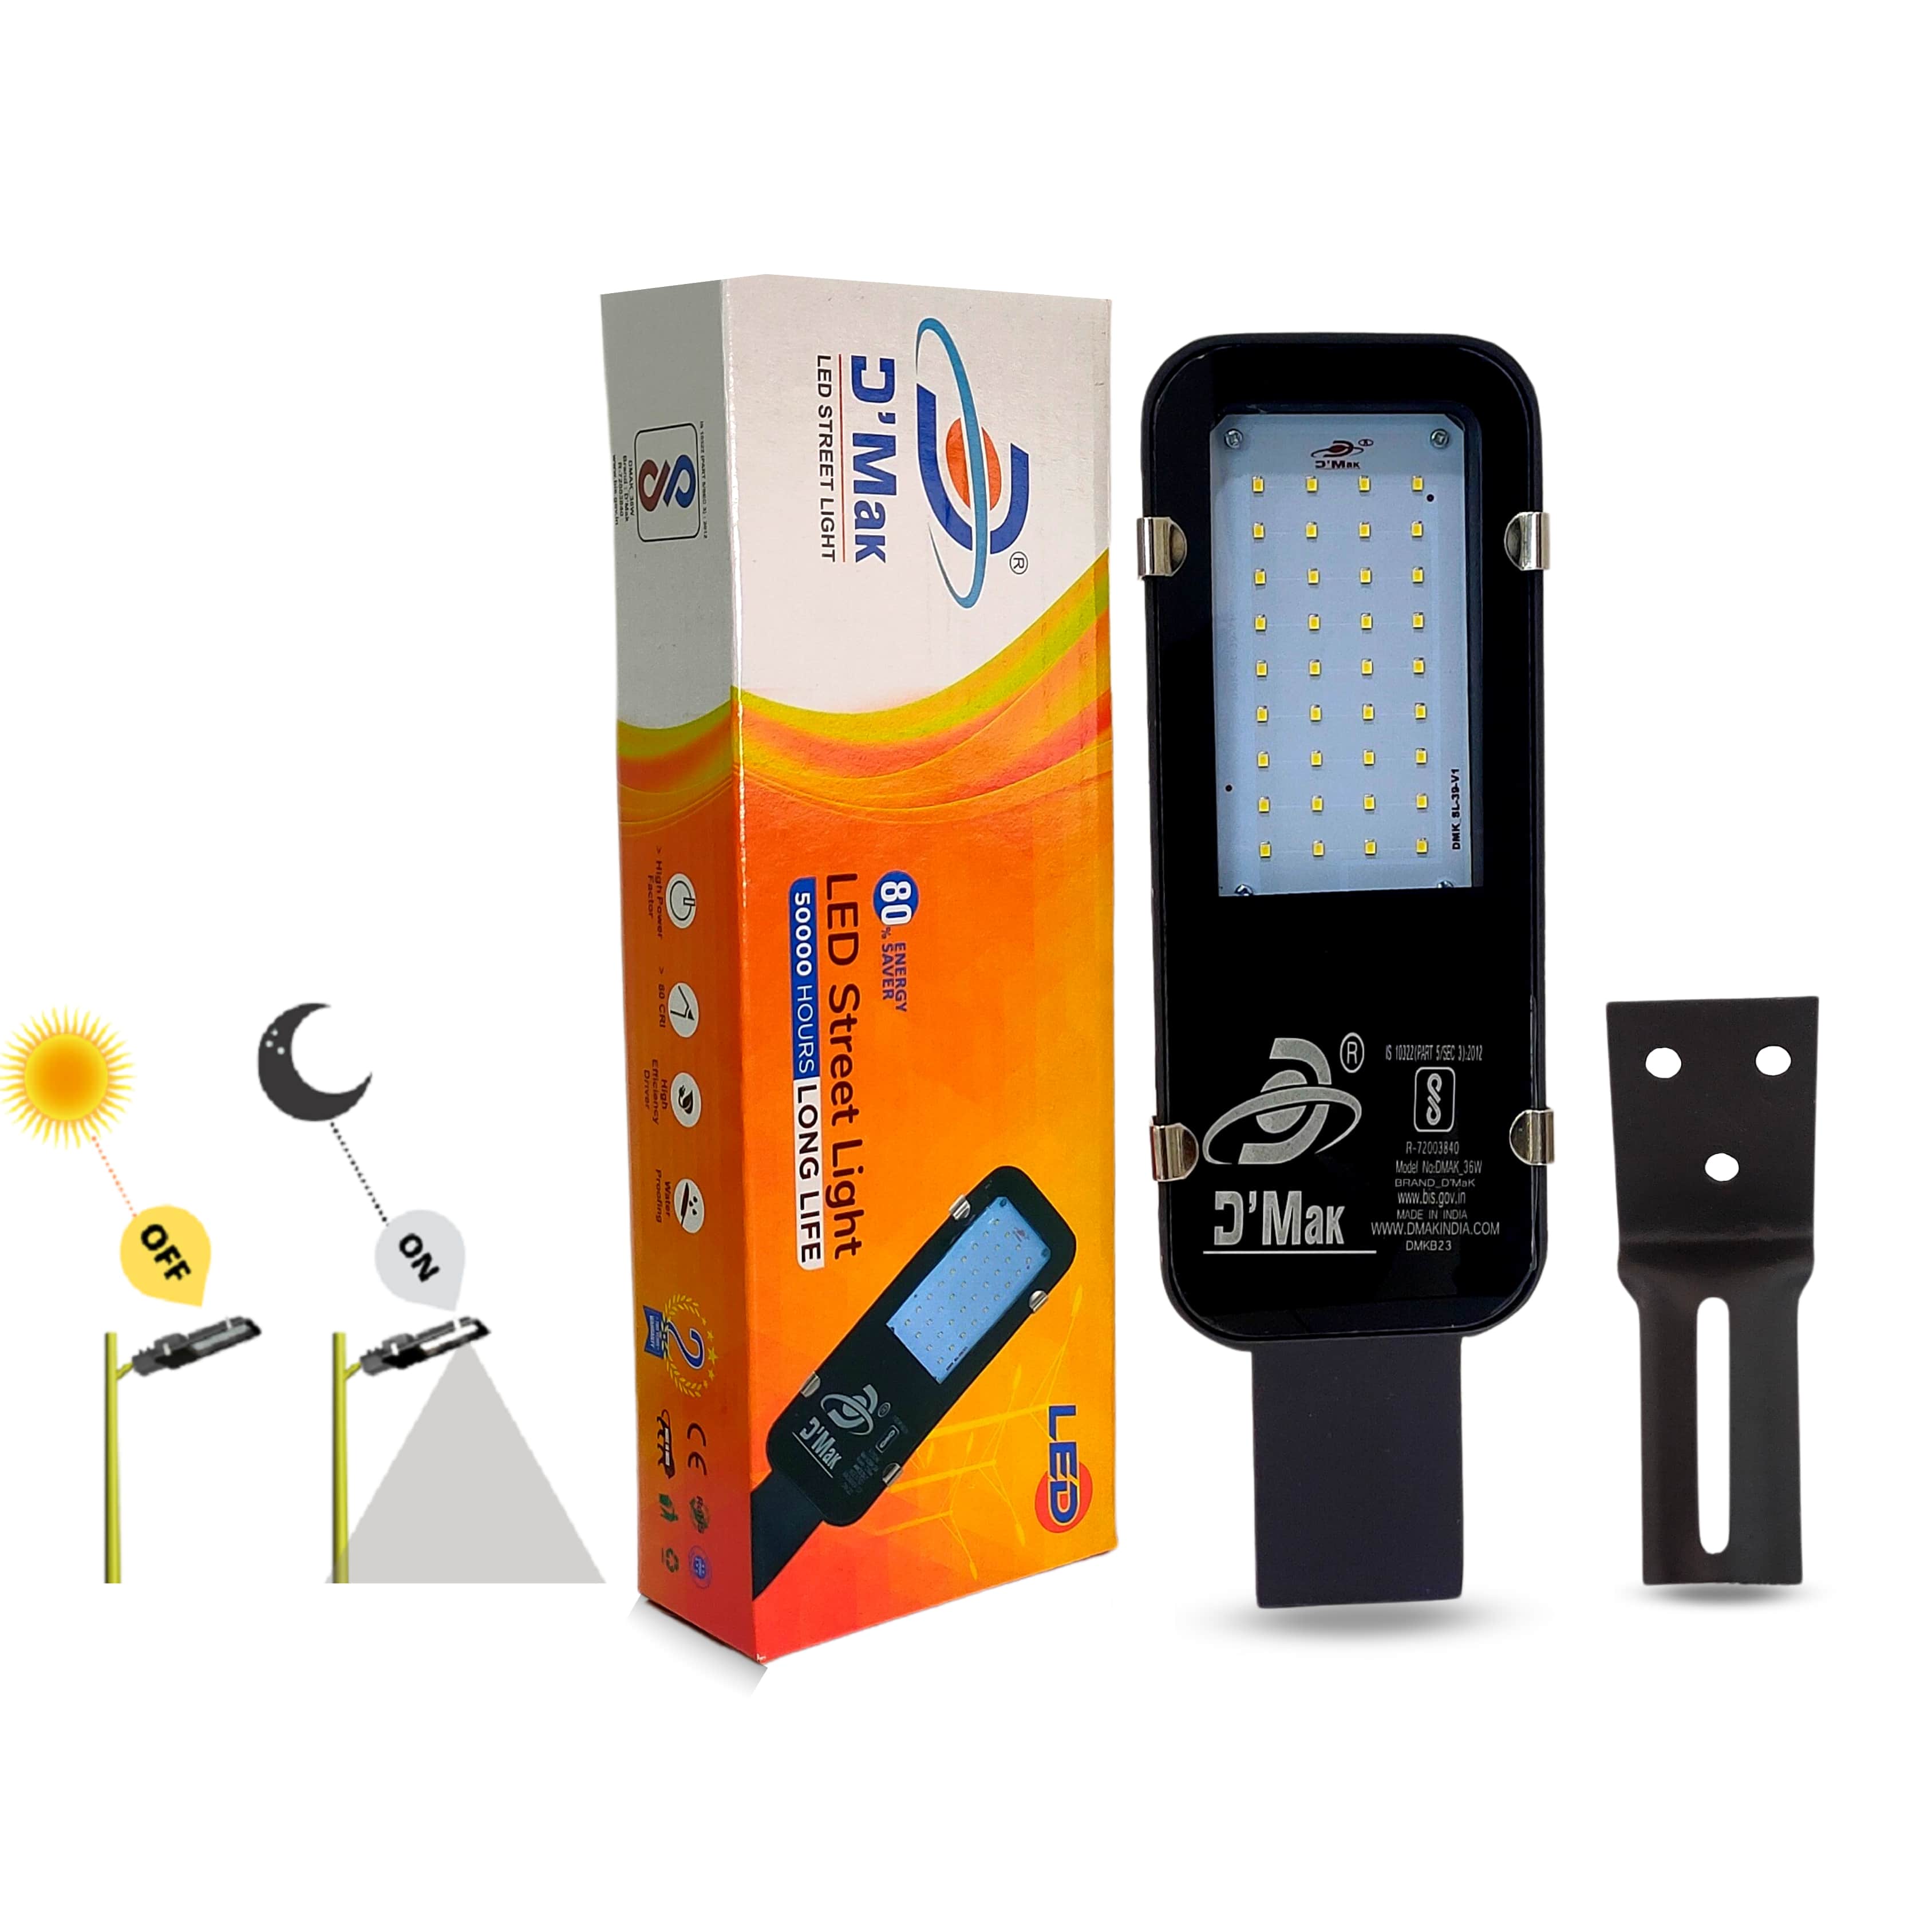 36 Watt Automatic Sensor System LED Street Light Waterproof IP65 for Outdoor Purposes